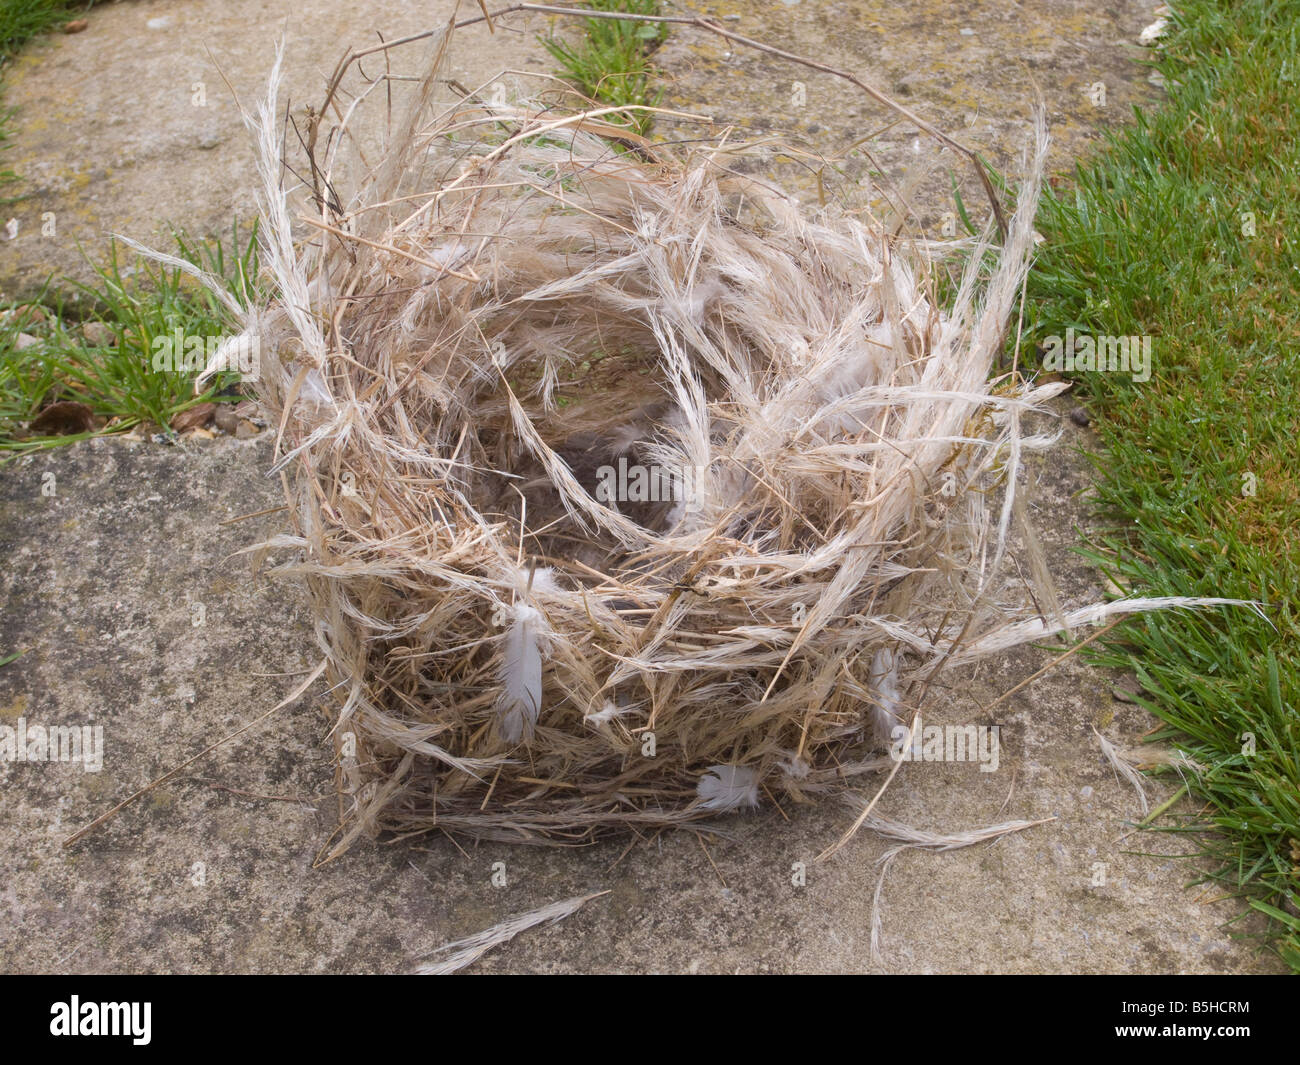 Readymade Sparrow Nest (Jute)